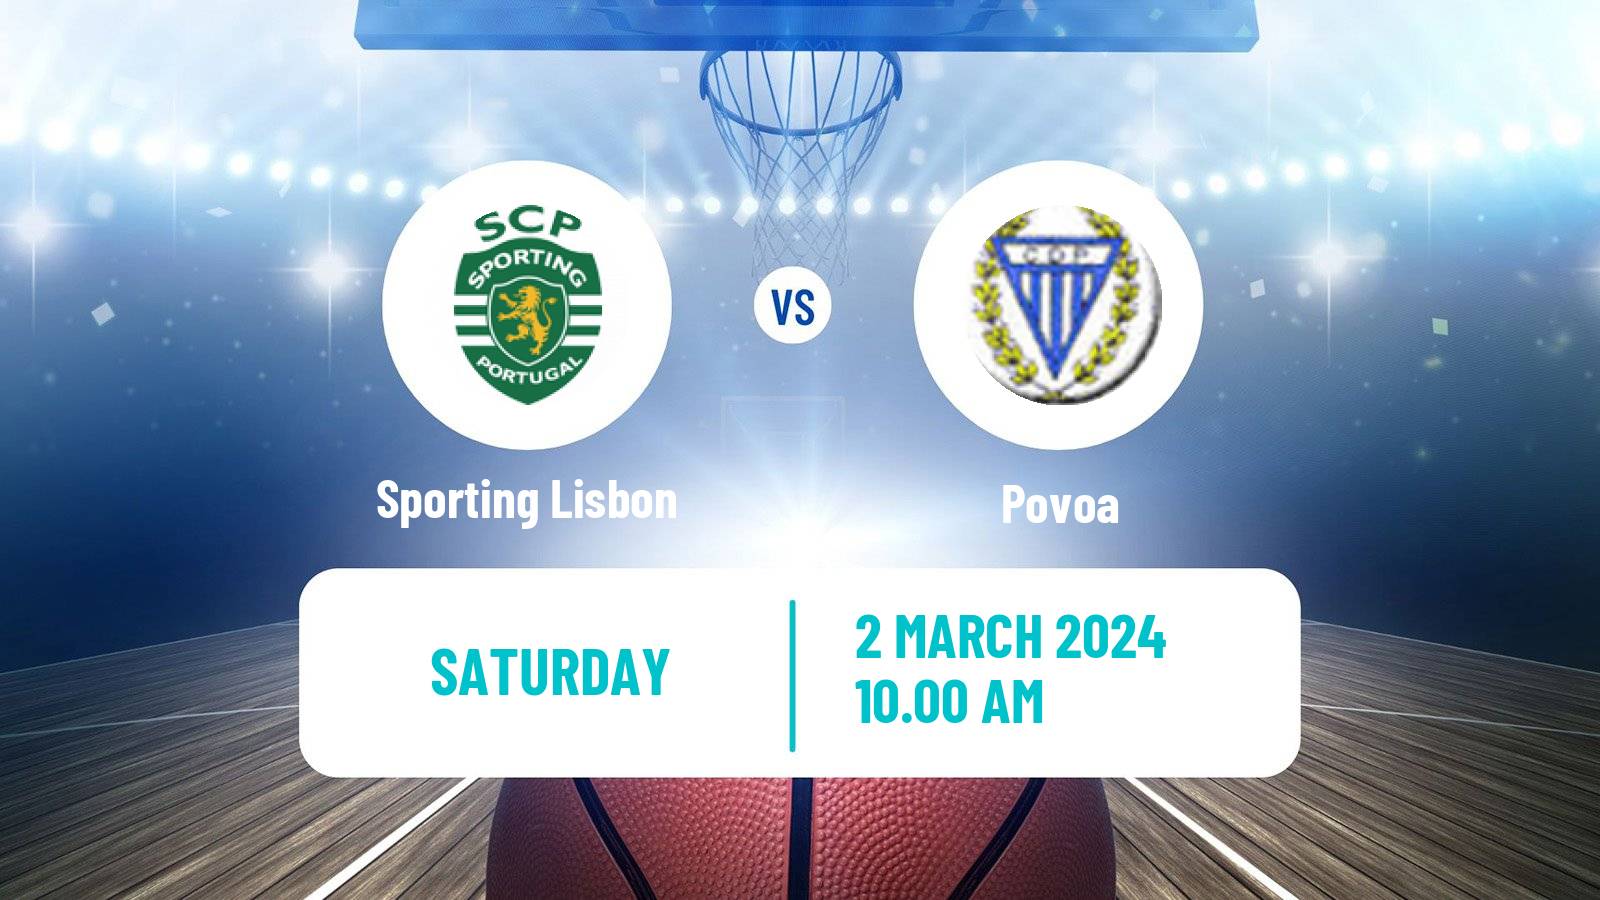 Basketball Portuguese LPB Sporting Lisbon - Povoa